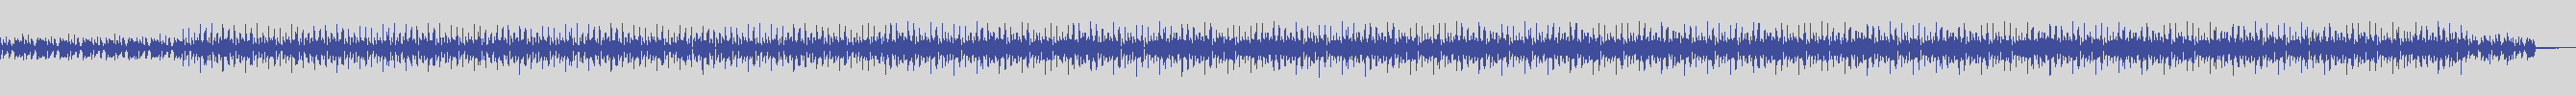 noclouds_chillout [NOC113] Purechill - Un Attimo [Original Mix] audio wave form